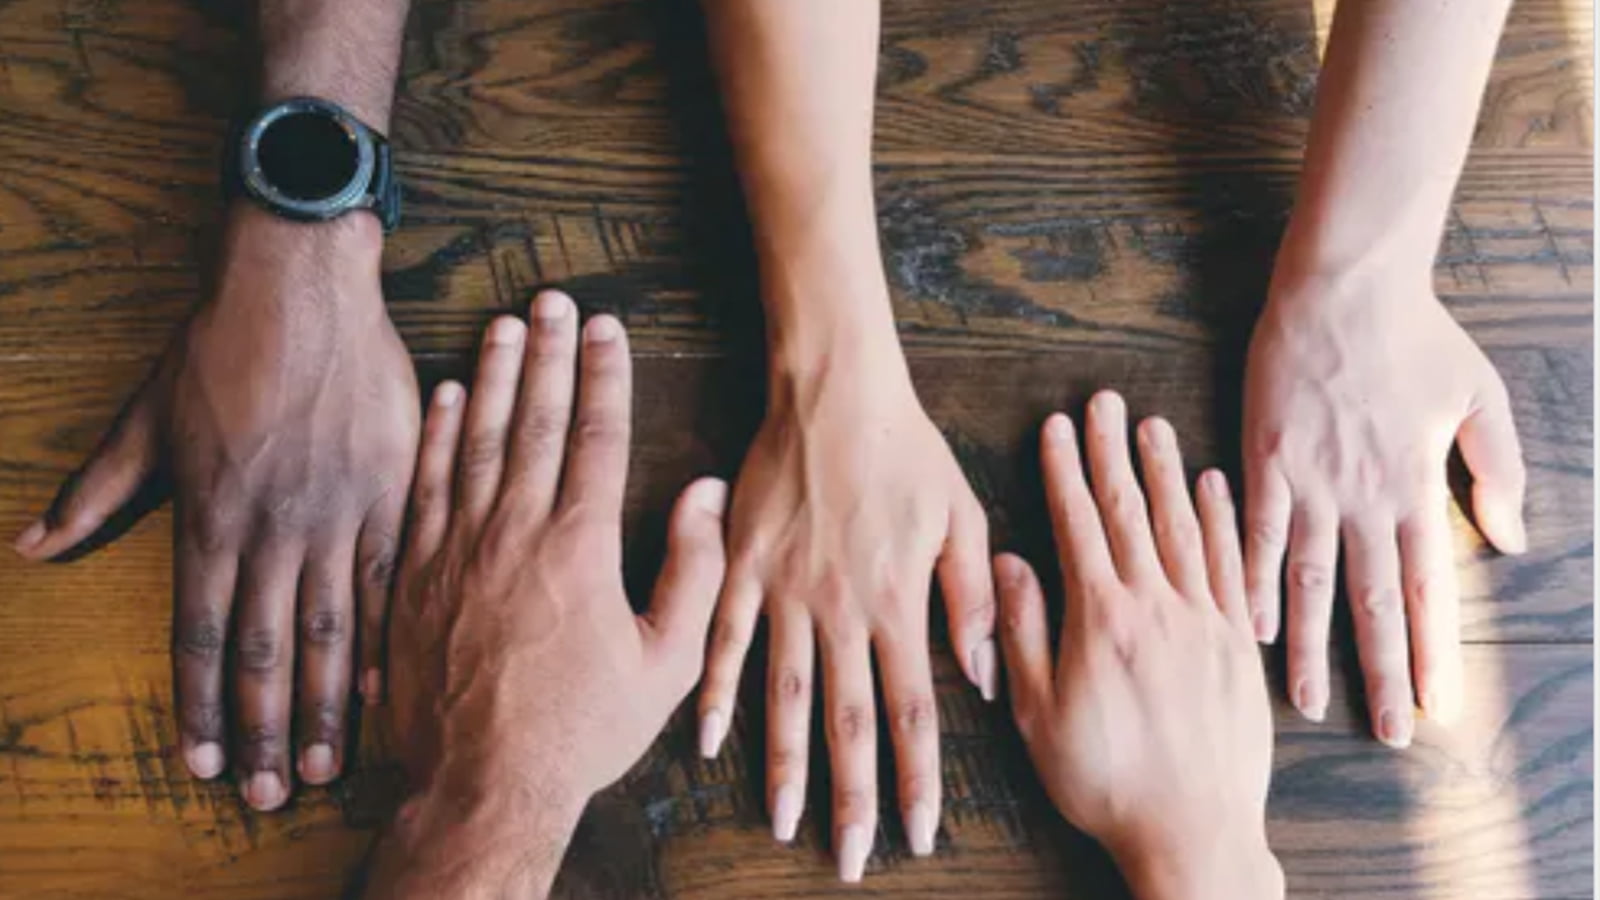 Multi racial hands spread across a table